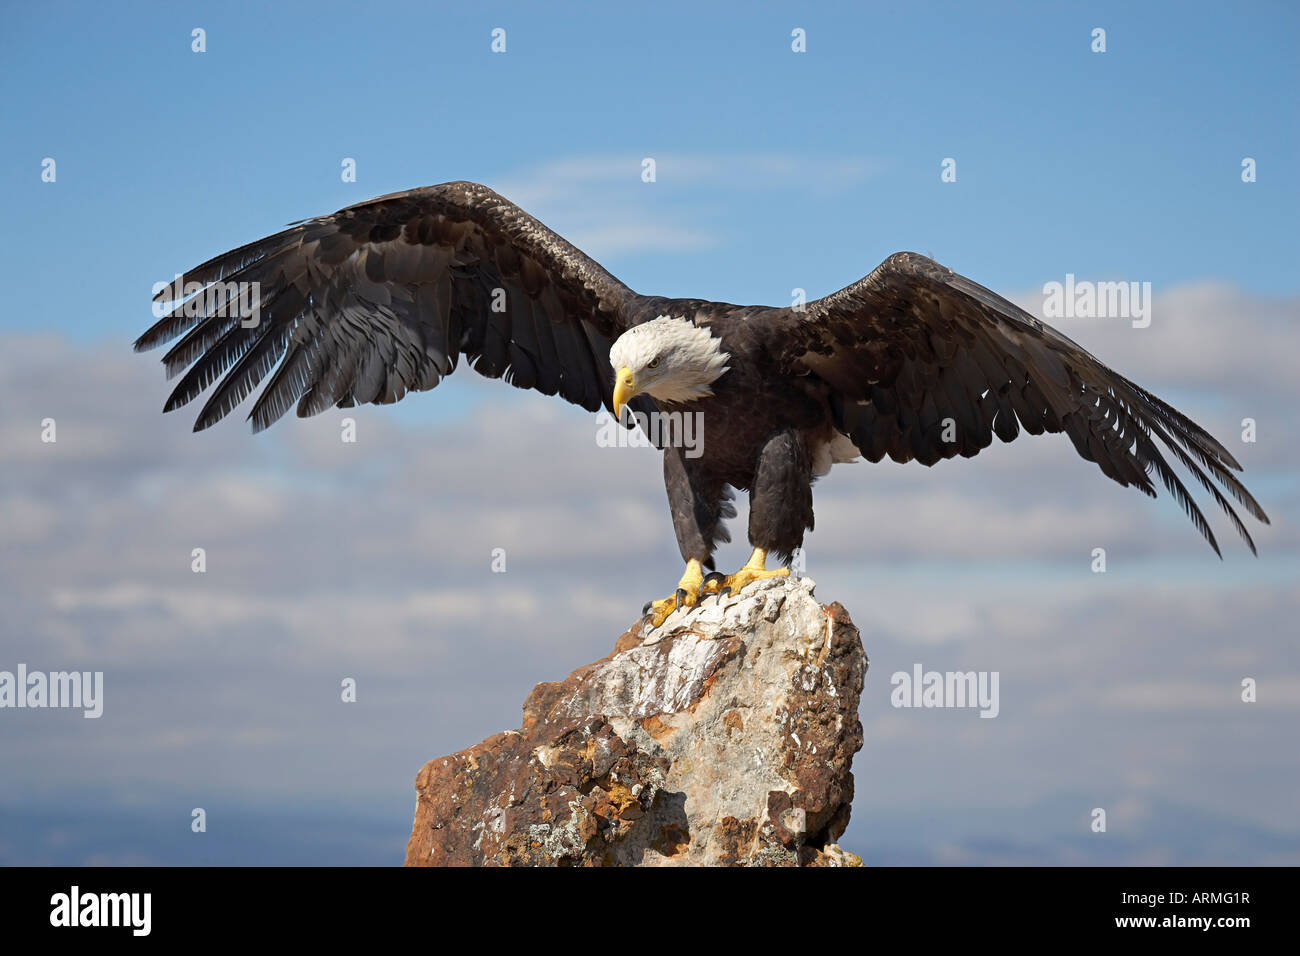 Bald eagle (Haliaeetus leucocephalus) perched with spread wings, Boulder County, Colorado, USA, North America Stock Photo